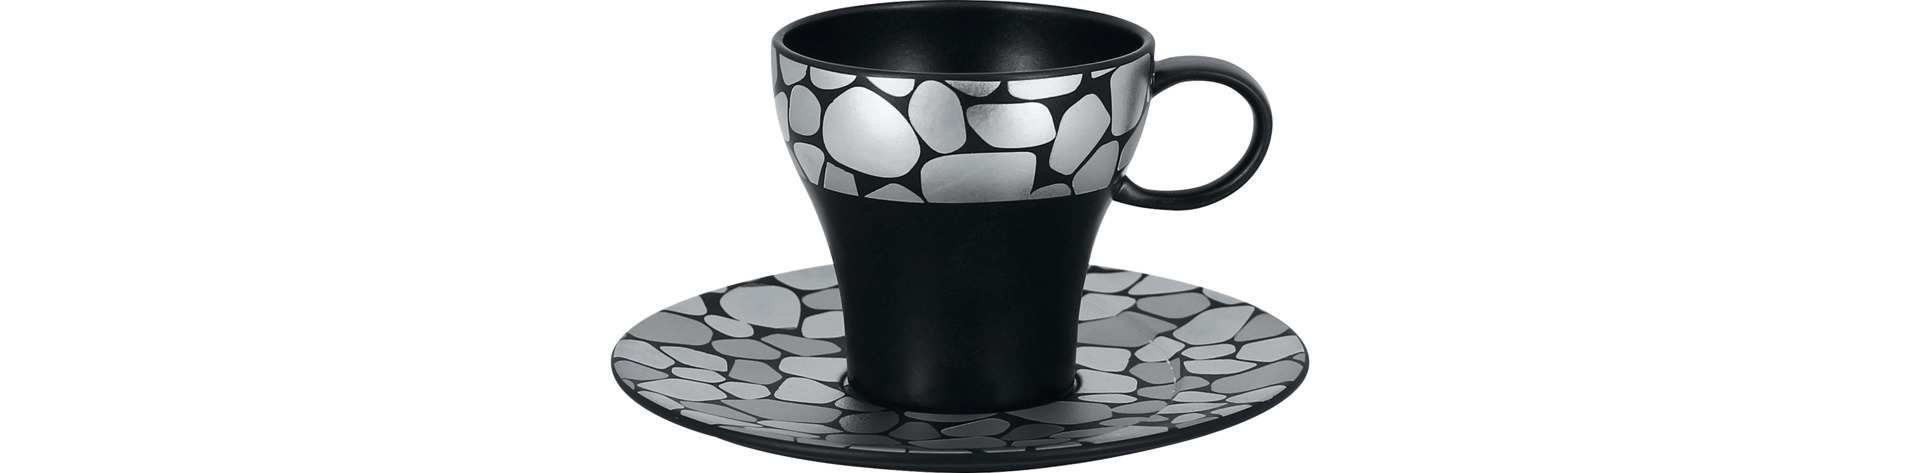 Kaffeetasse 0,20 l silber / schwarz